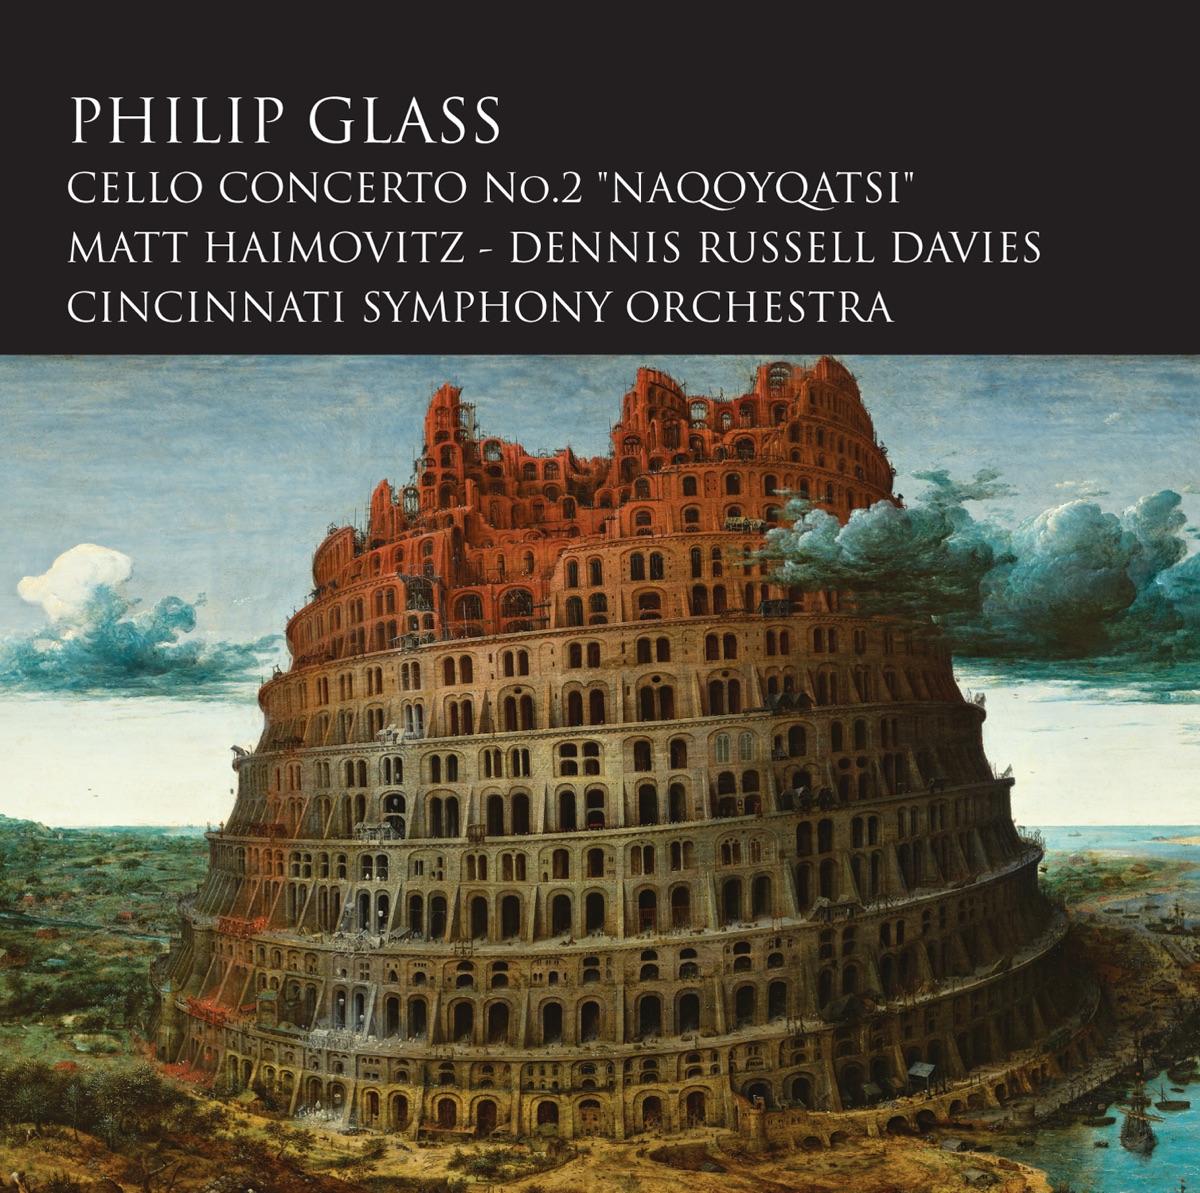 Philip Glass: Cello Concerto No. 2 "Naqoyqatsi" - Album by Matt Haimovitz,  Cincinnati Symphony Orchestra & Dennis Russell Davies - Apple Music